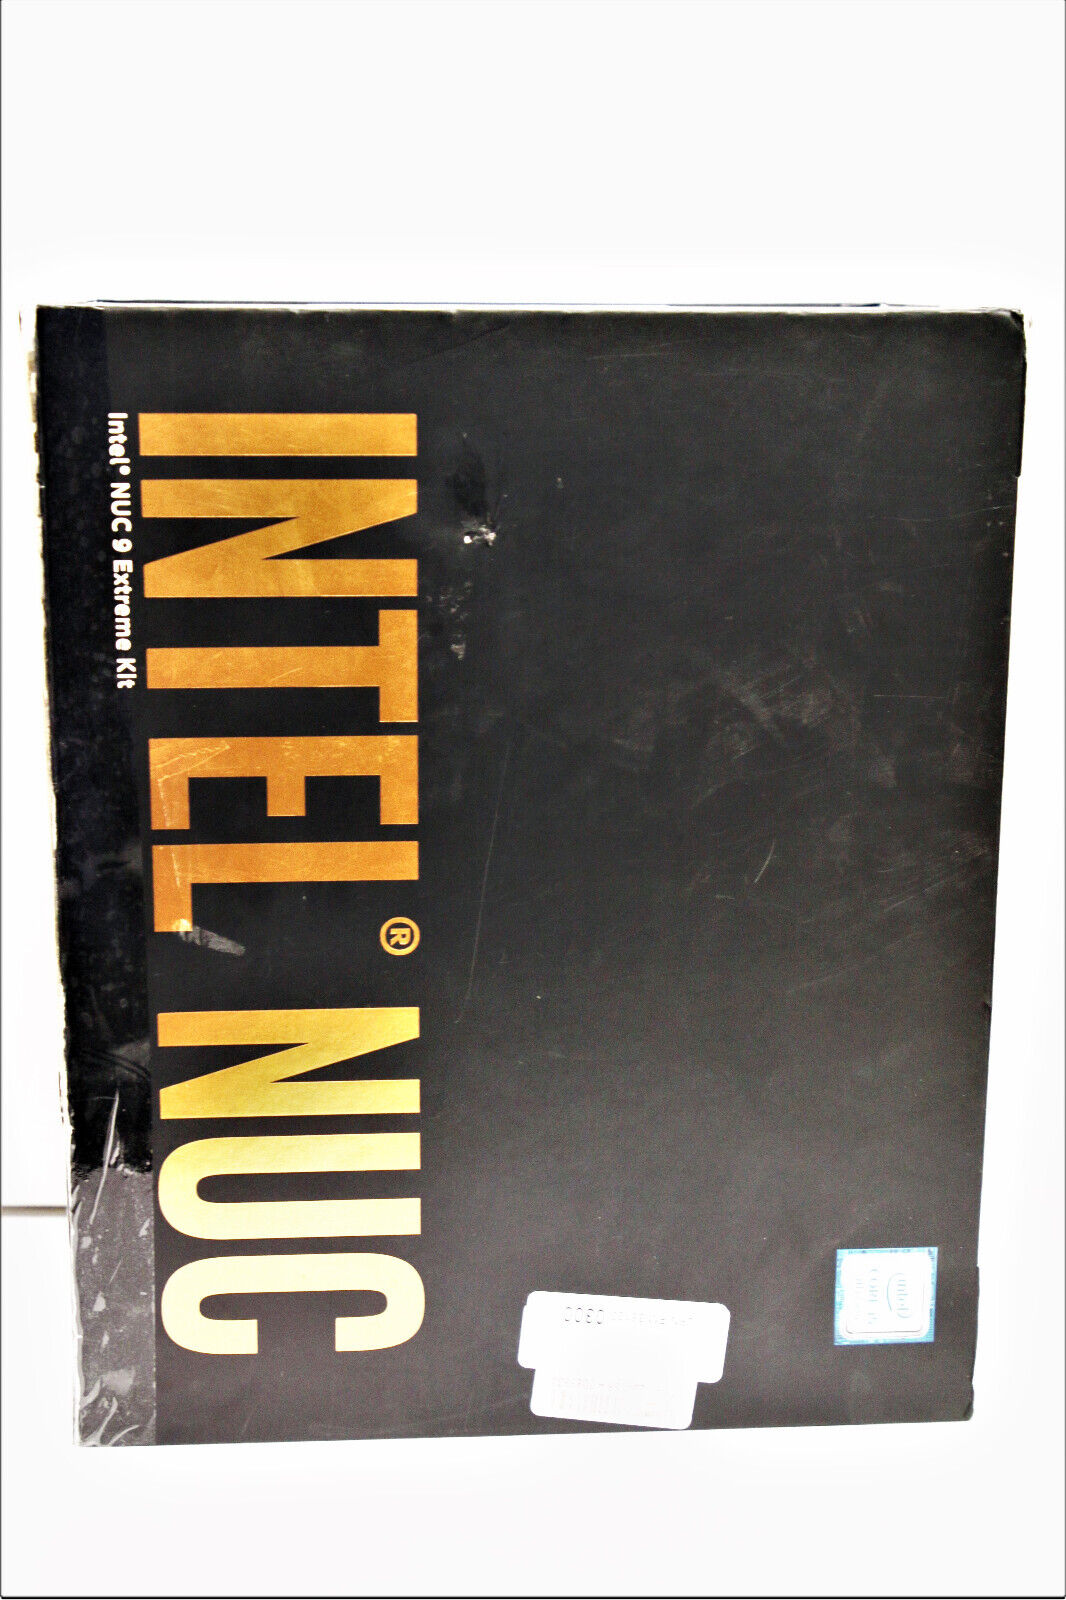 Intel NUC 9 EXTREME KIT BXNUC9I5QNX    #1898